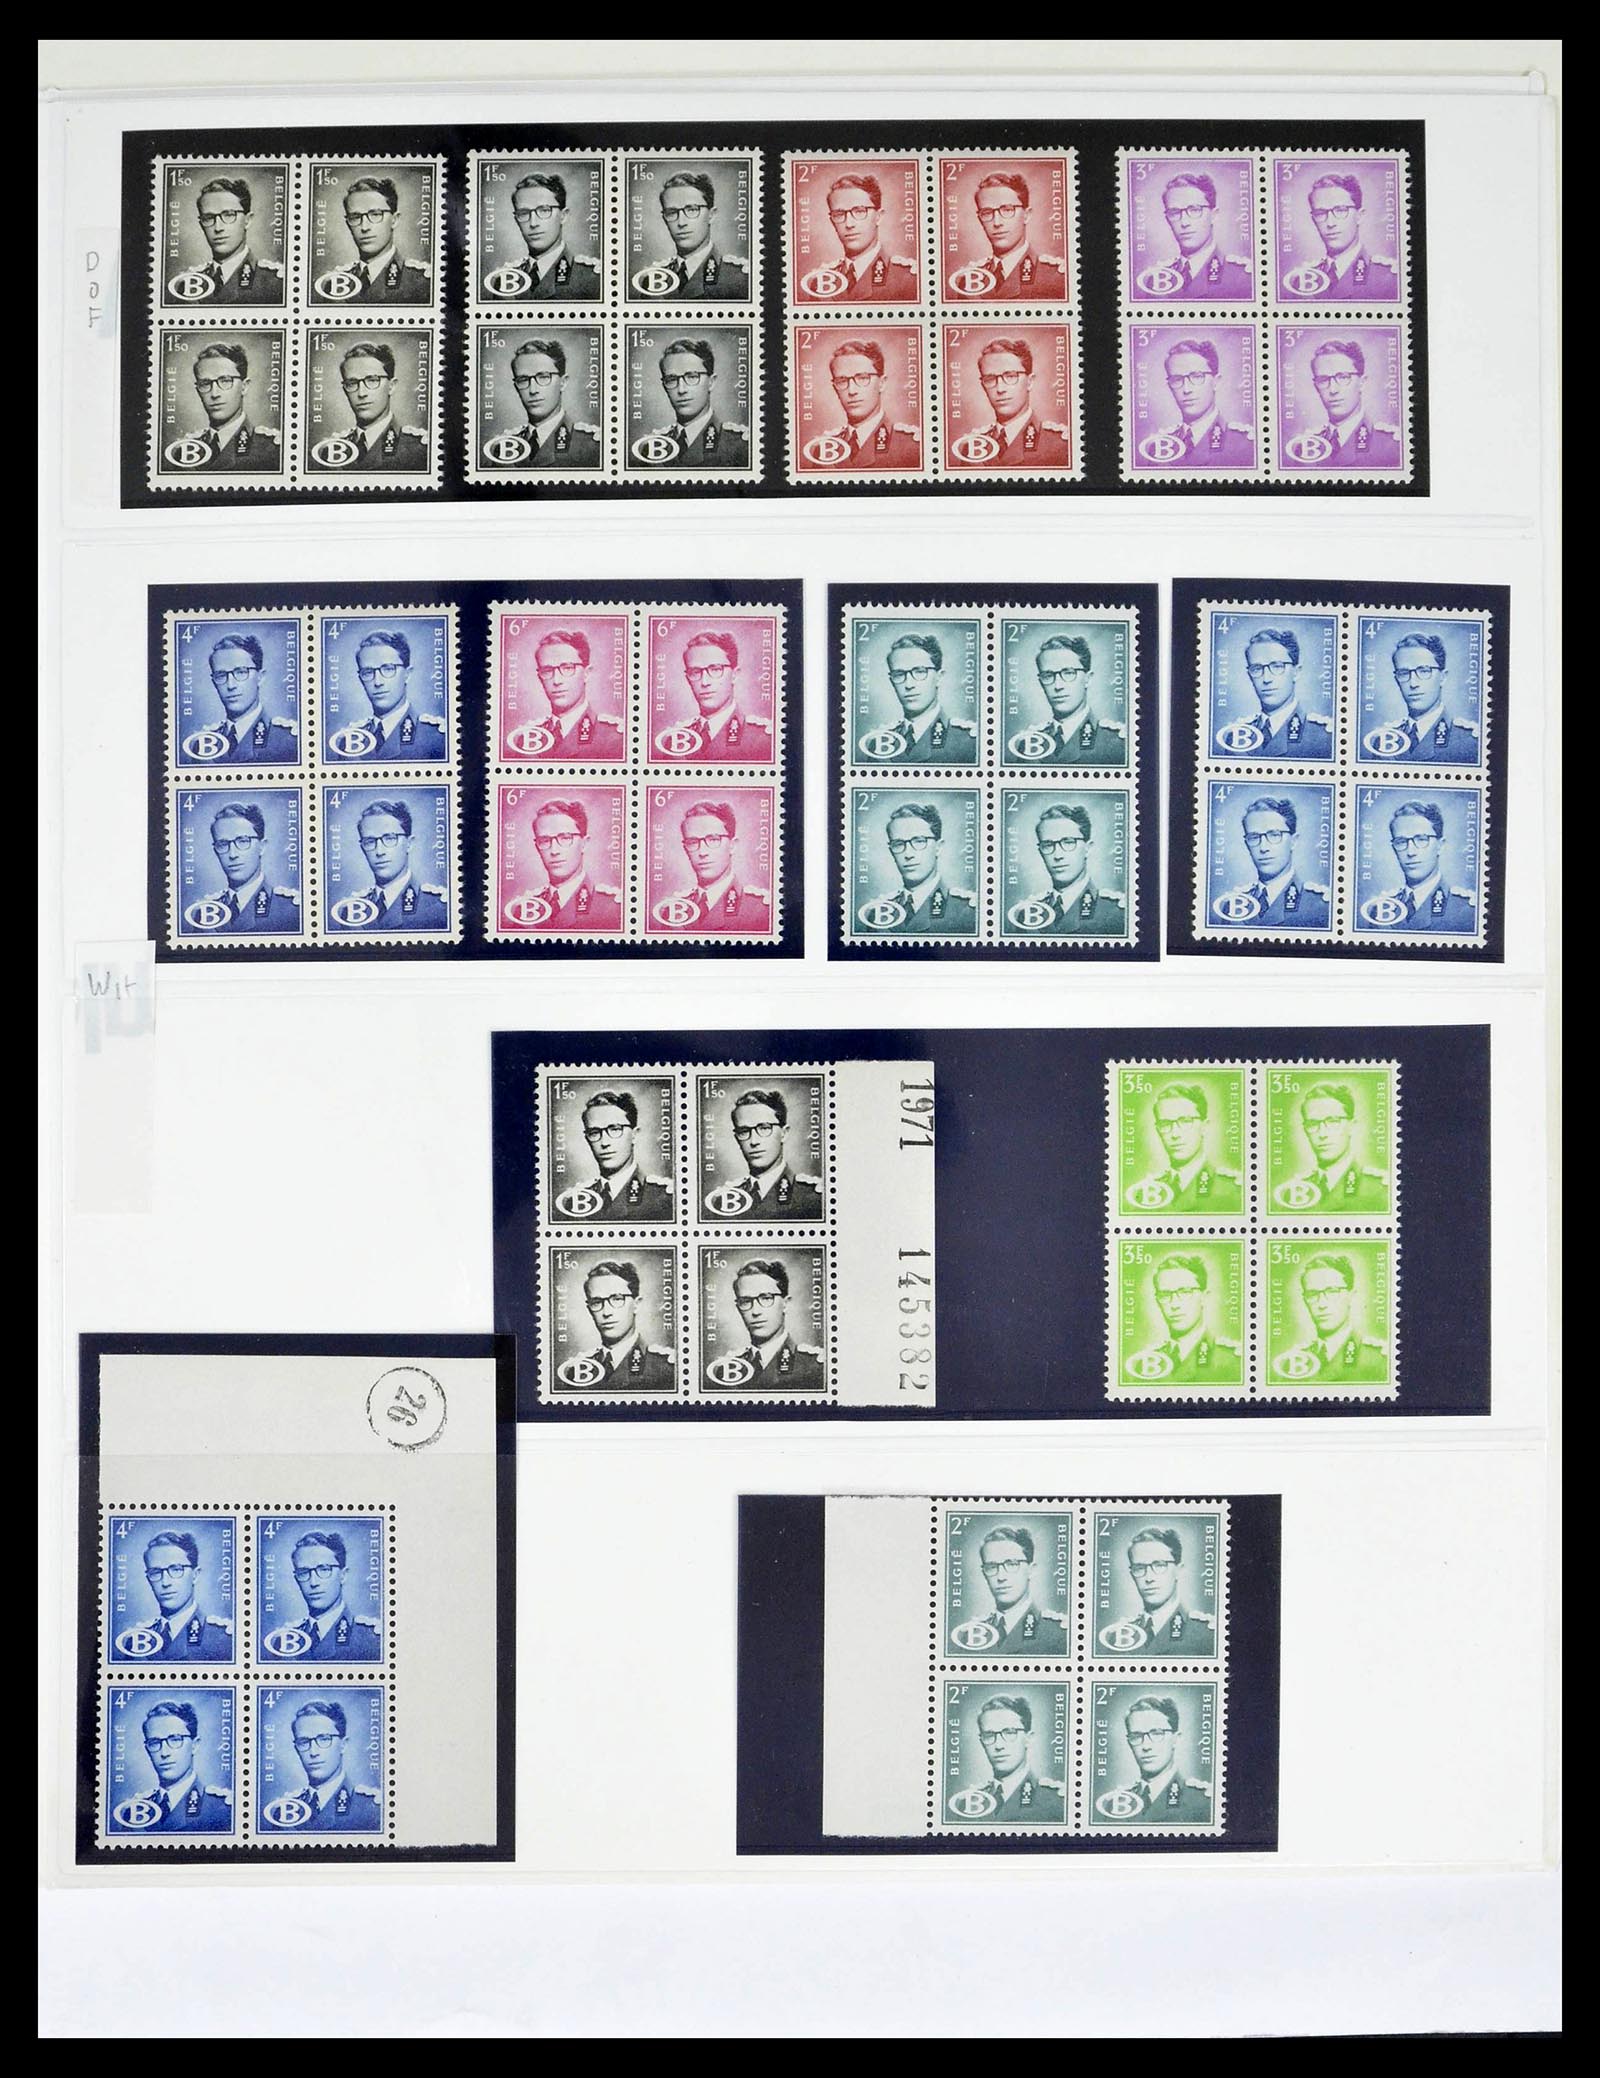 39229 0035 - Stamp collection 39229 Belgium Boudewijn with glasses 1952-1975.